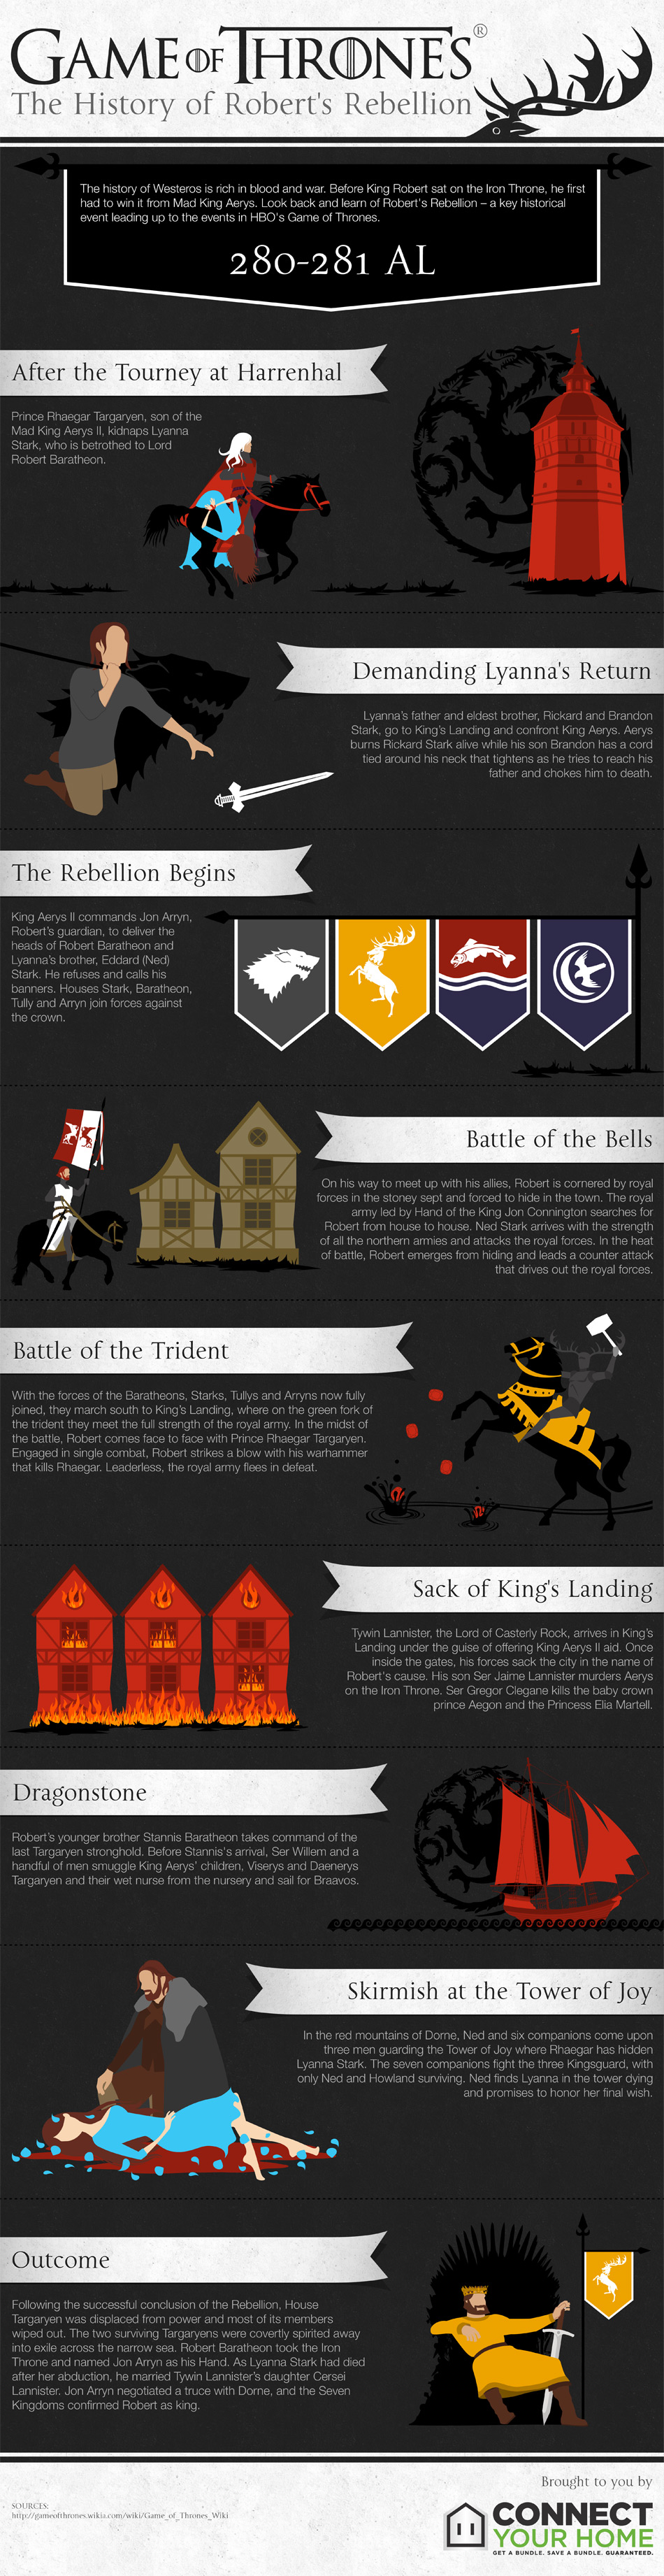 The History of Robert's Rebellion